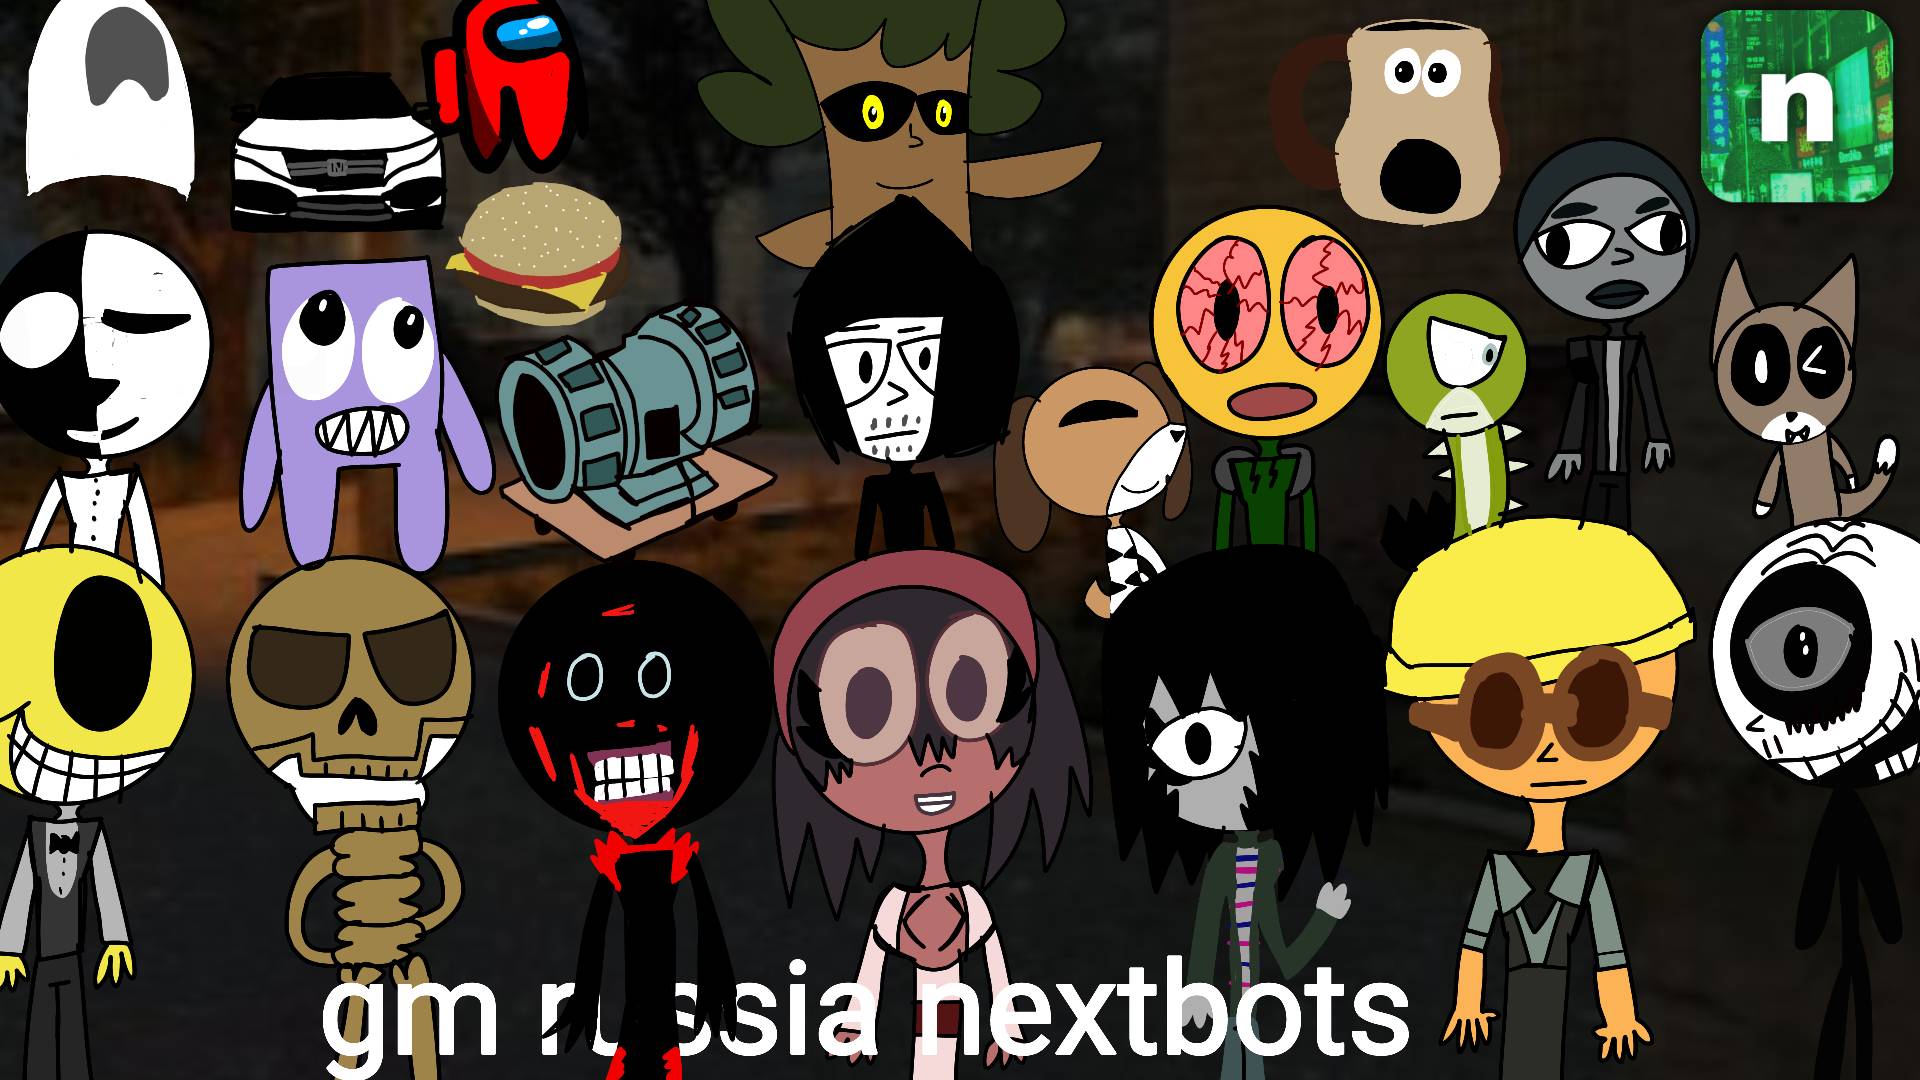 Nico's nextbots memes by goodgirl8593 on DeviantArt